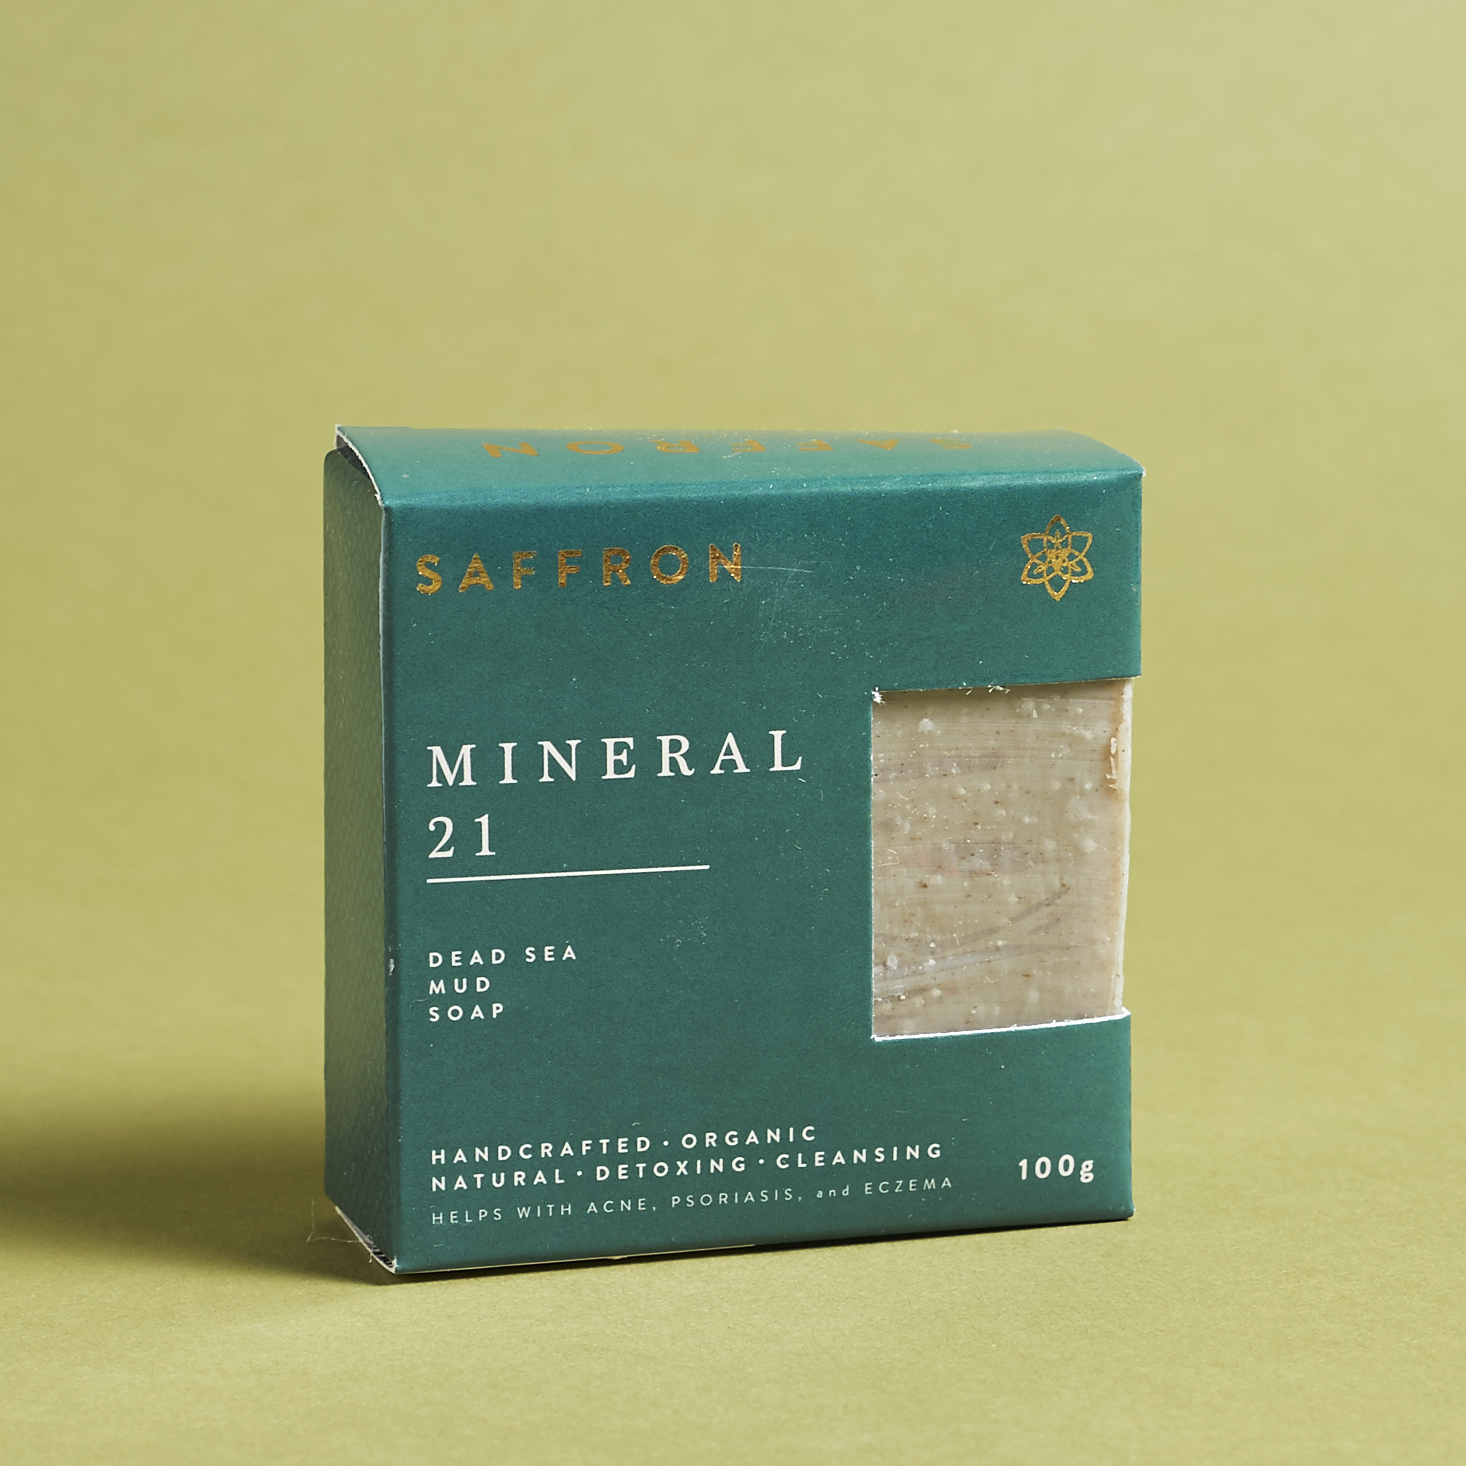 Read our review of the November 2016 Saffron Soap box!